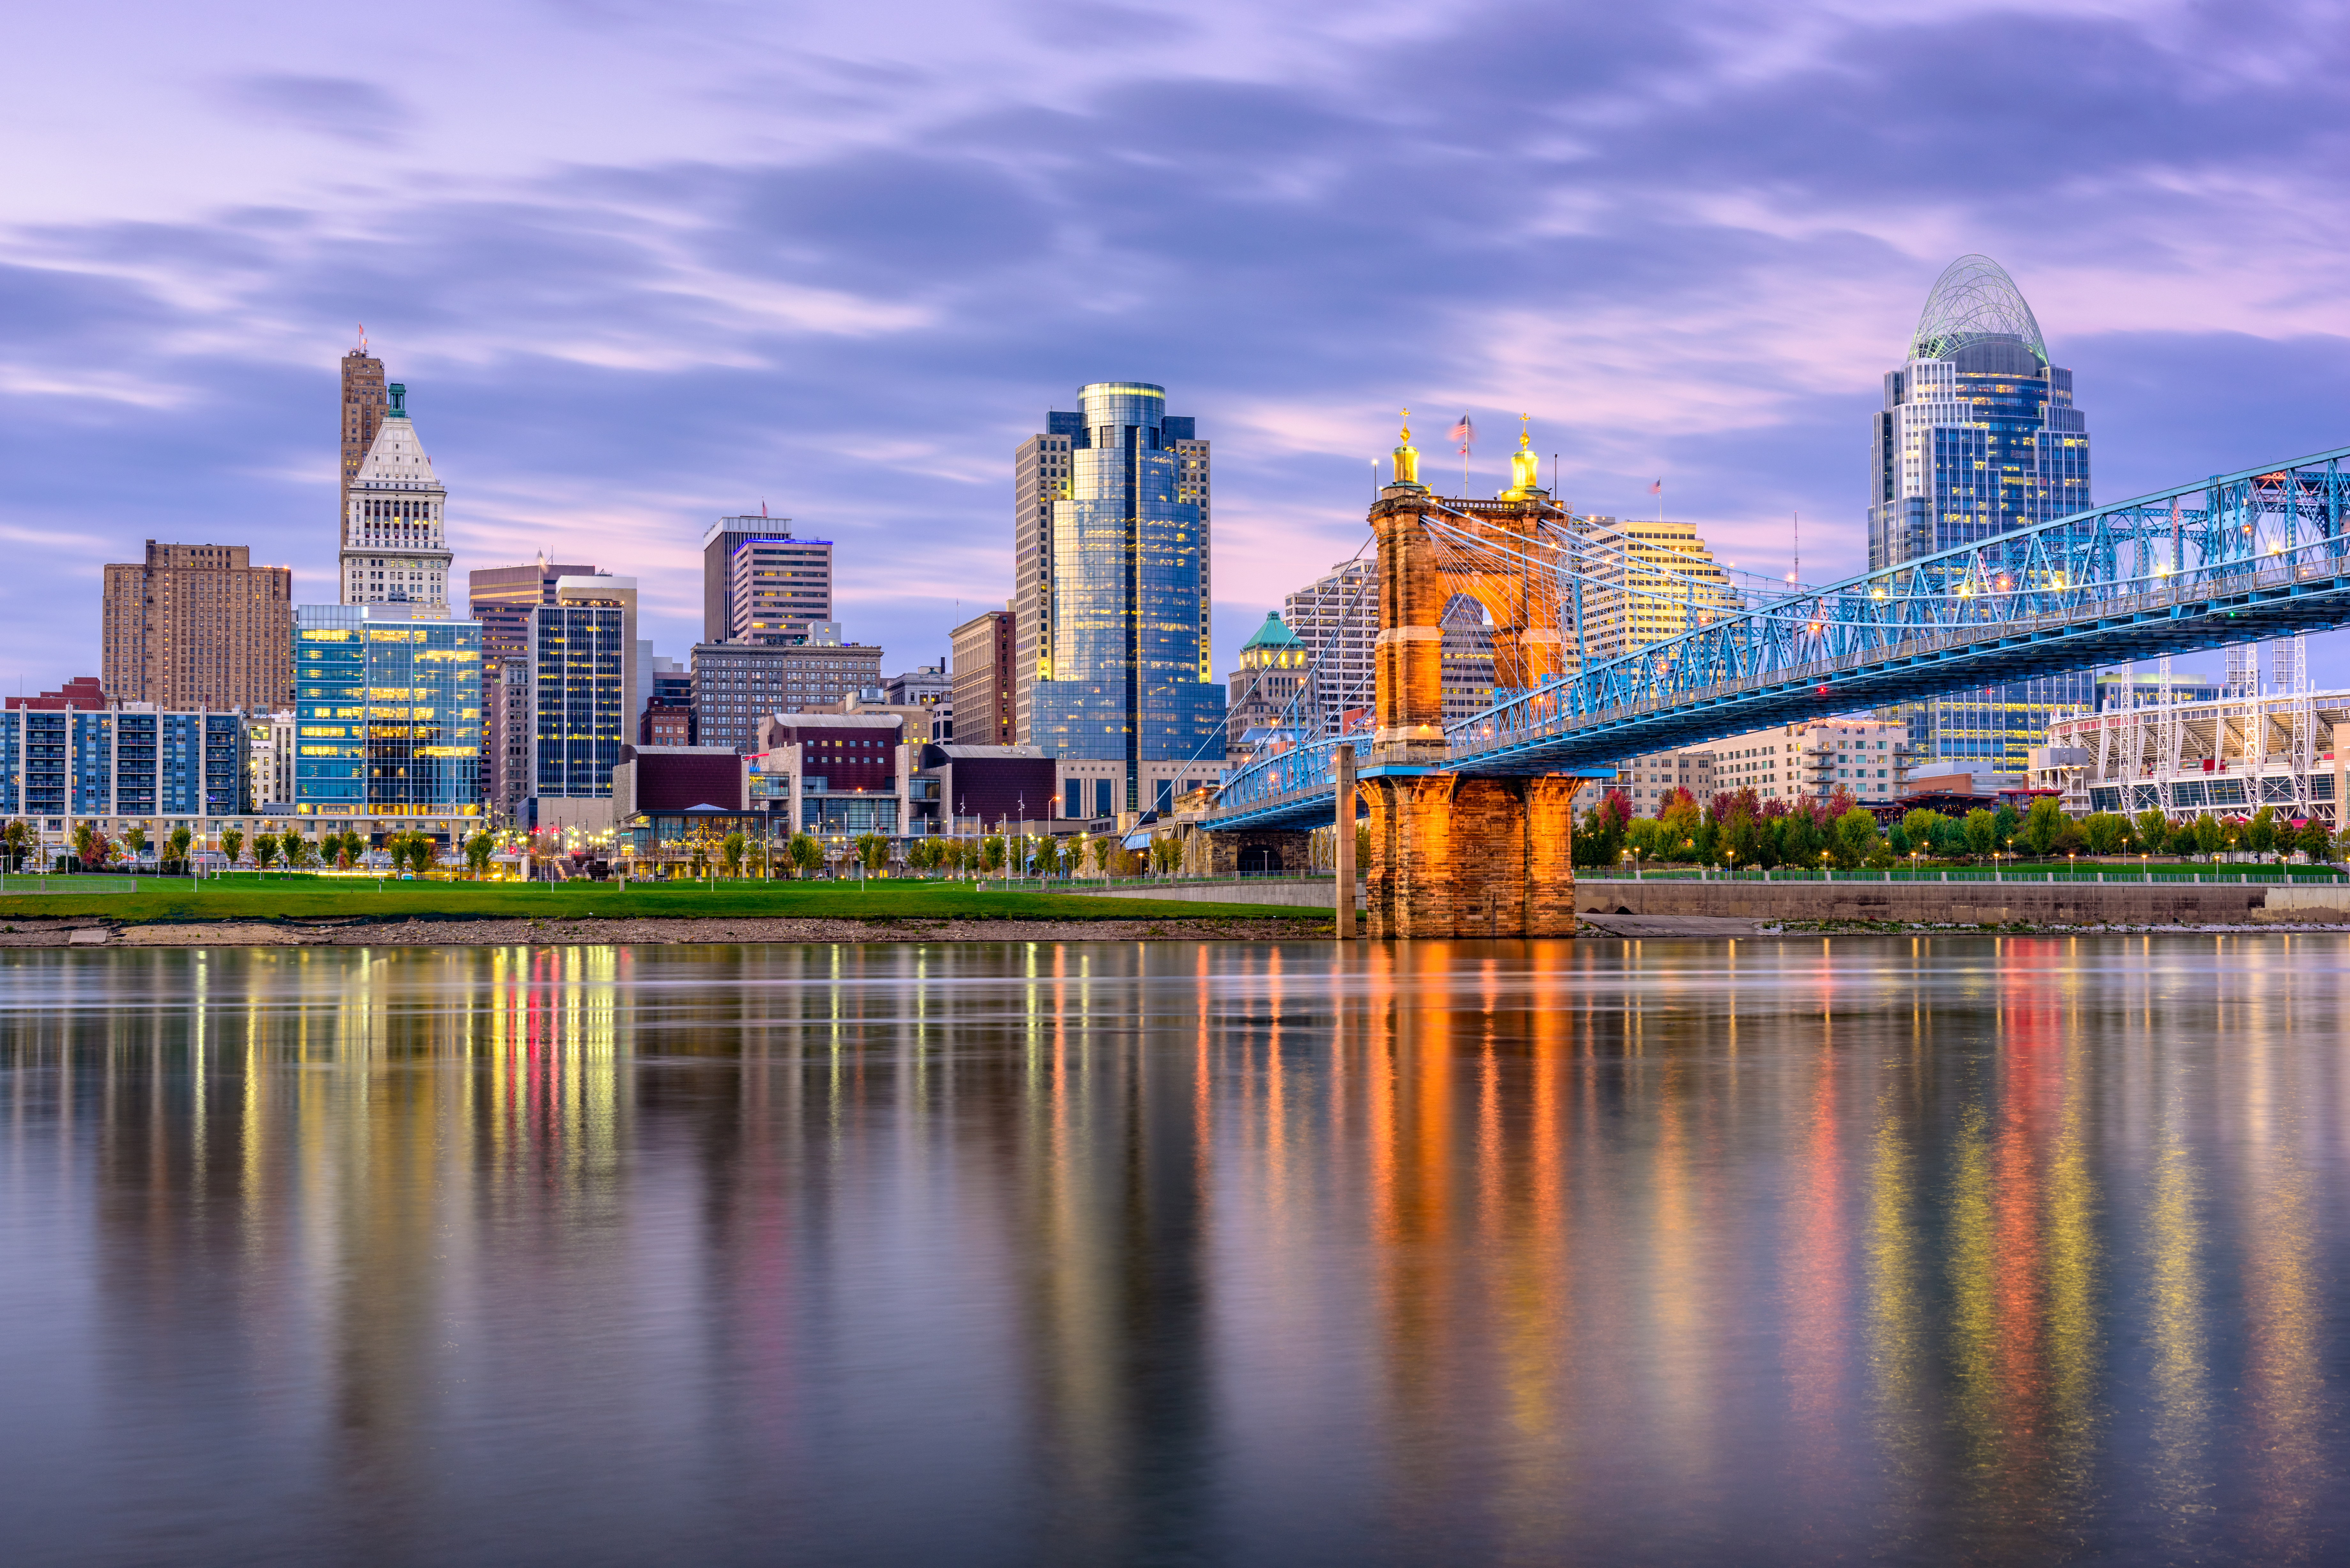 Cincinnati, Ohio, USA downtown skyline and bridge on the river at dusk.